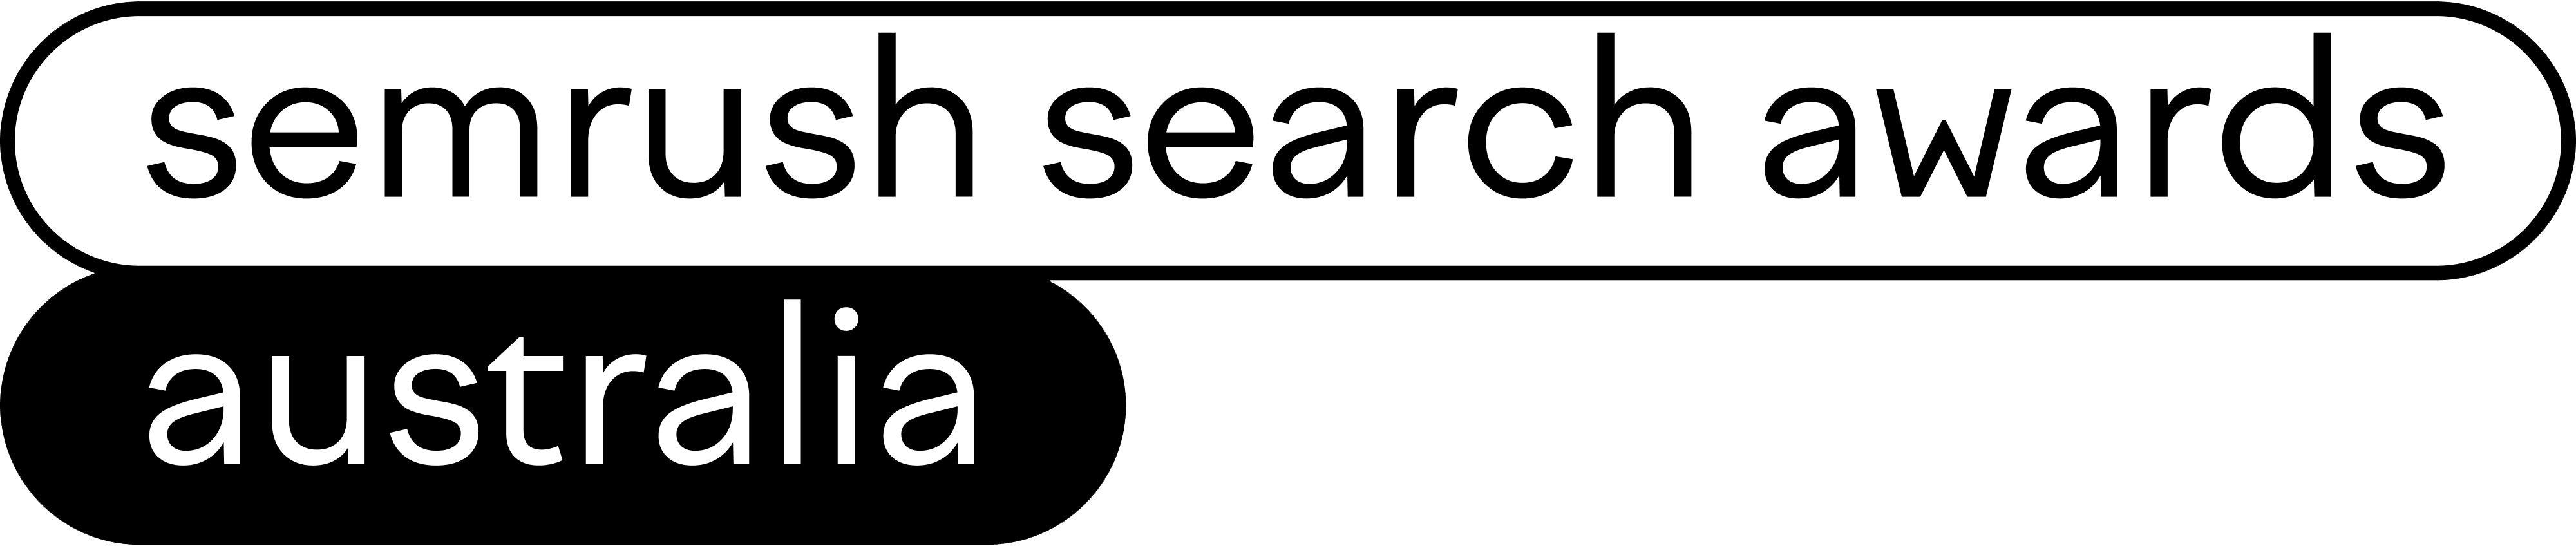 Semrush AU Search Awards logo